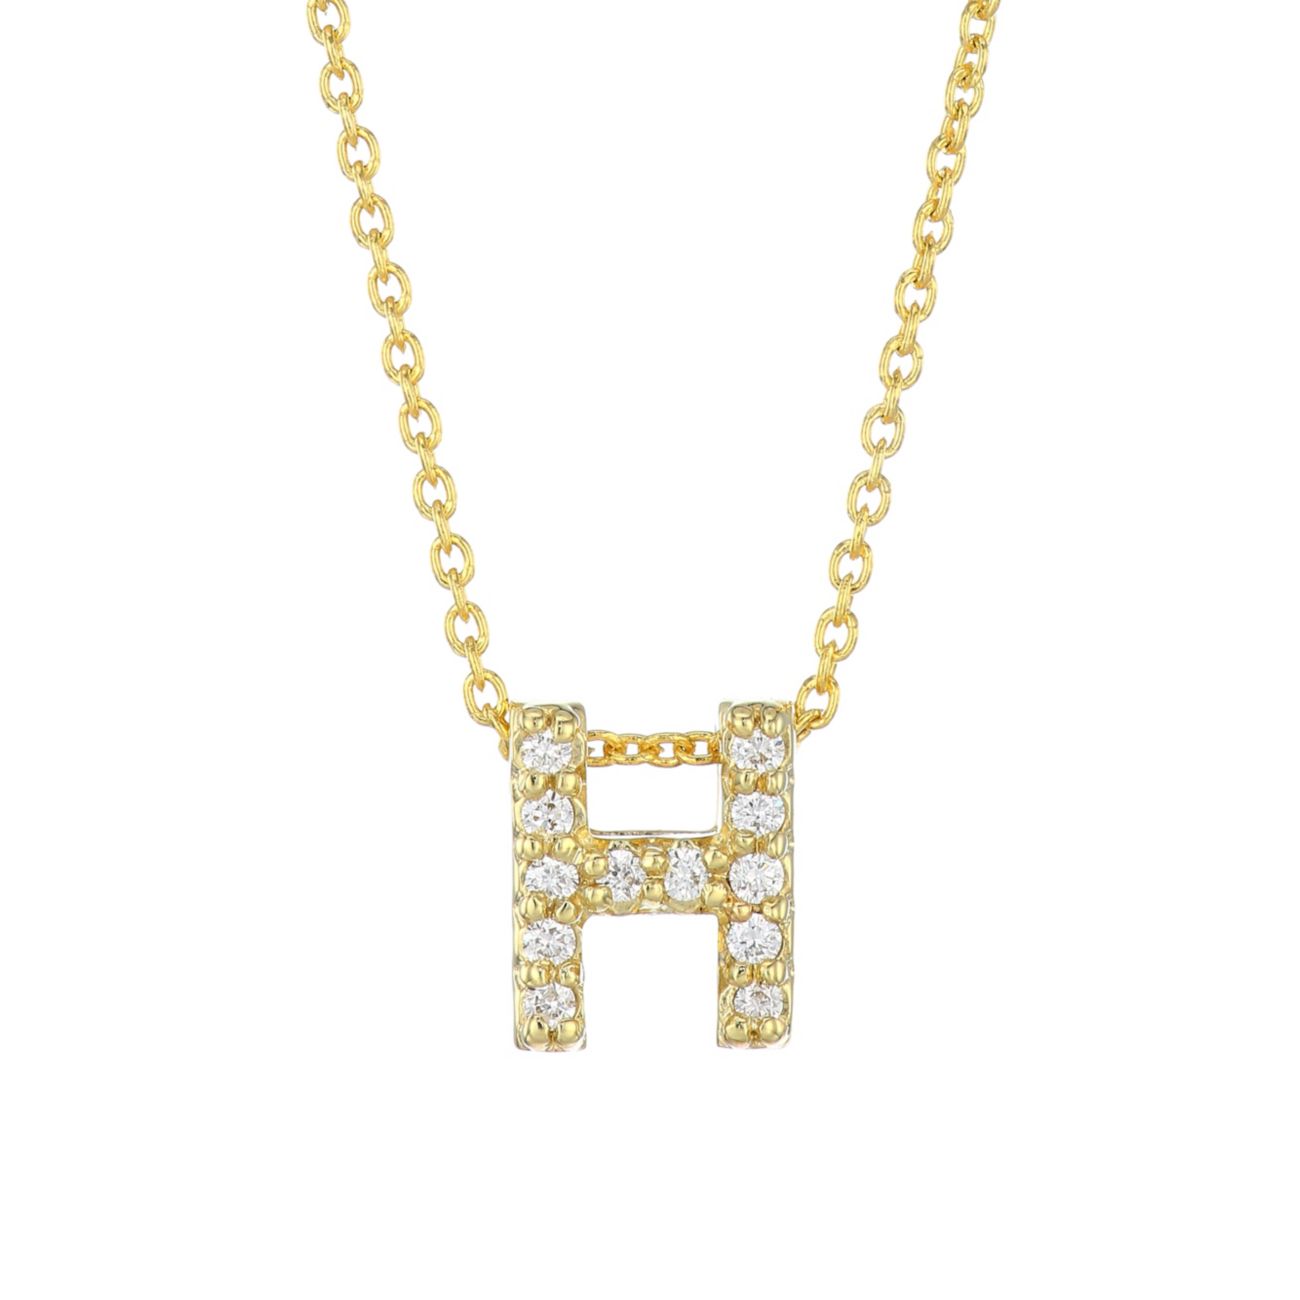 Tiny Treasures Diamond & amp; Ожерелье с подвеской H из желтого золота 18 карат Roberto Coin